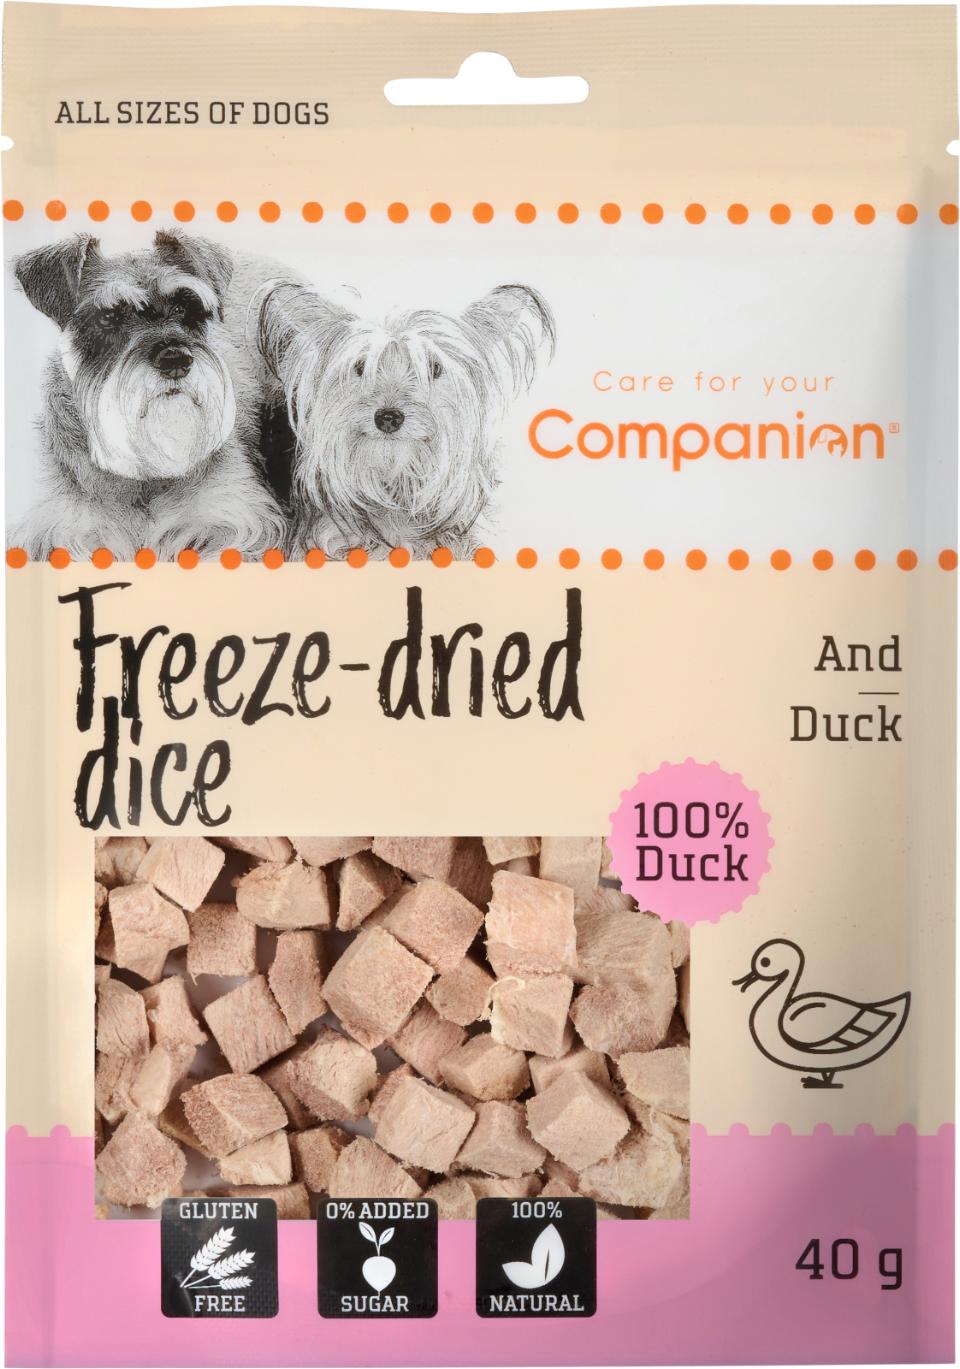 Companion freeze-dried dice - and 40g.